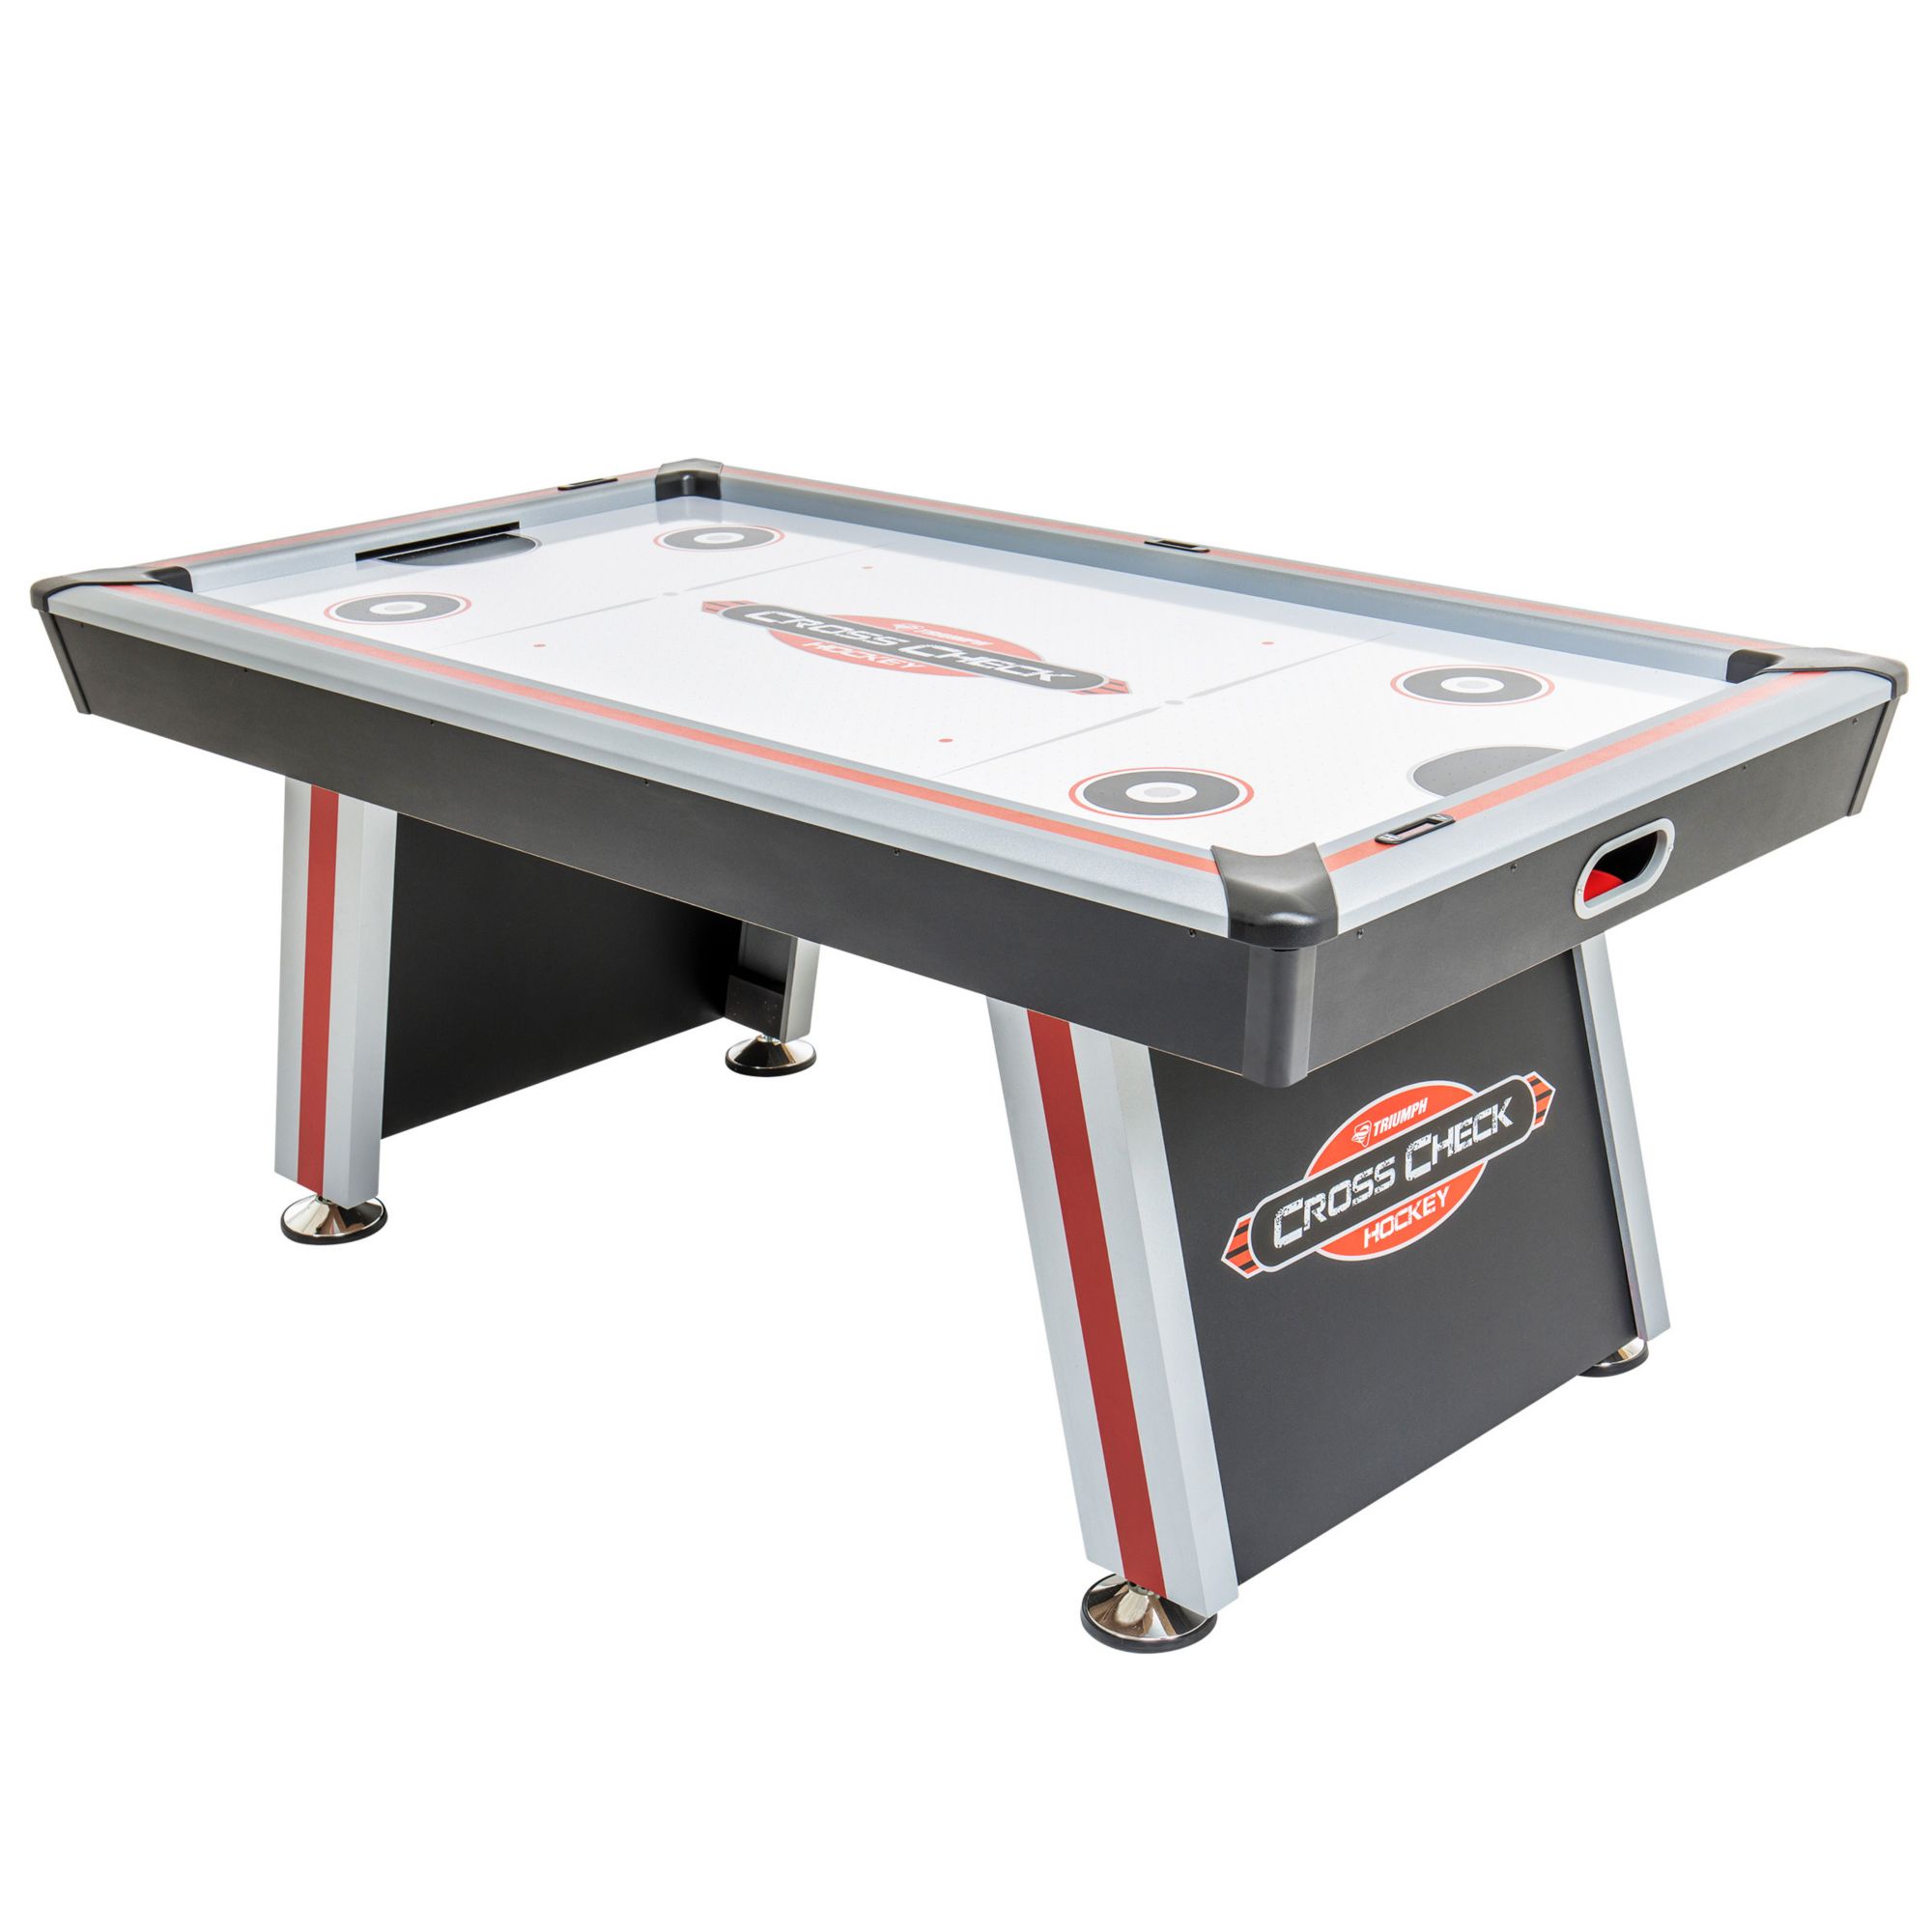 Selling Amusement Arcade Air Hockey Table 2 Player Air Hockey Game